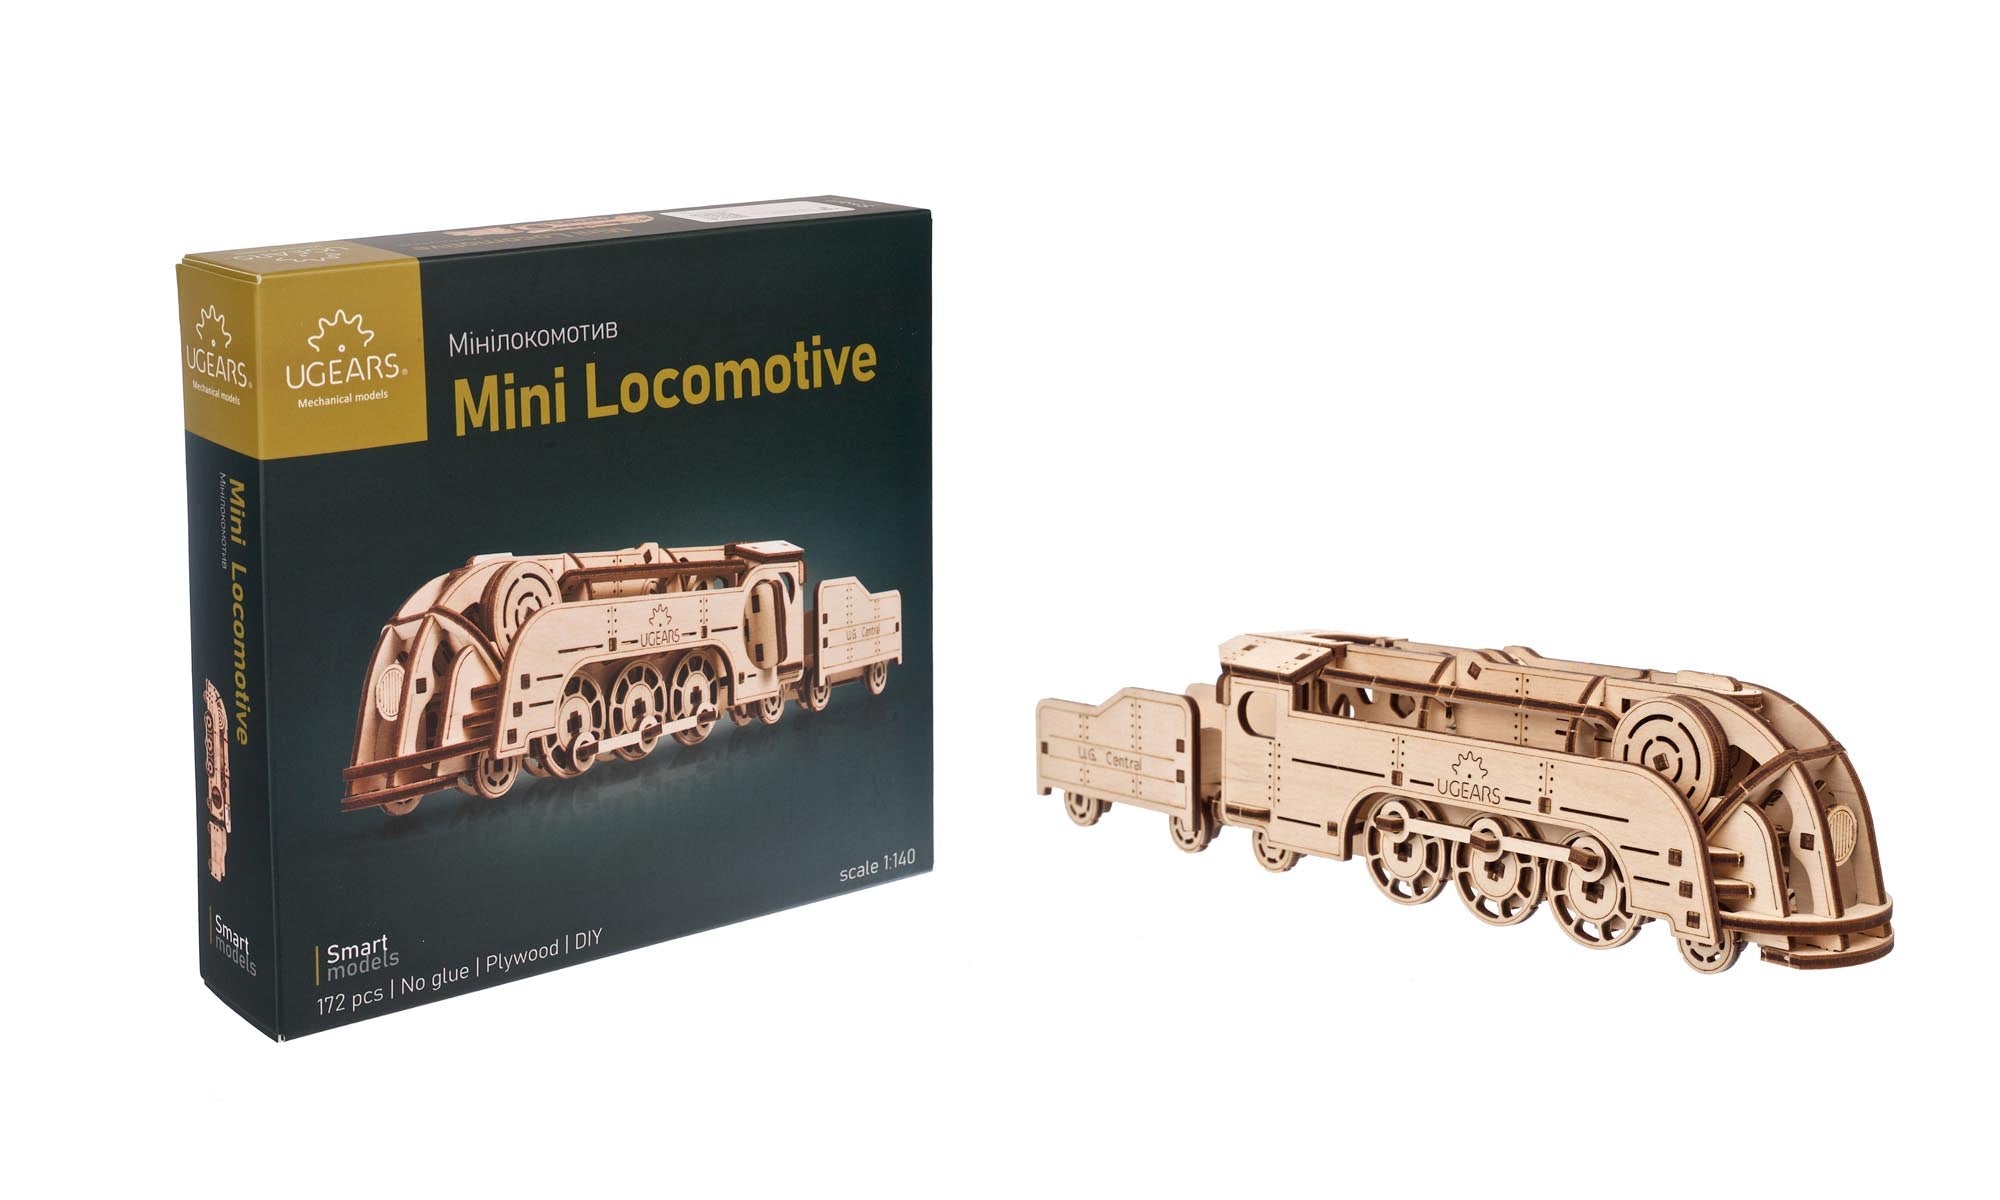 Mini Locomotive